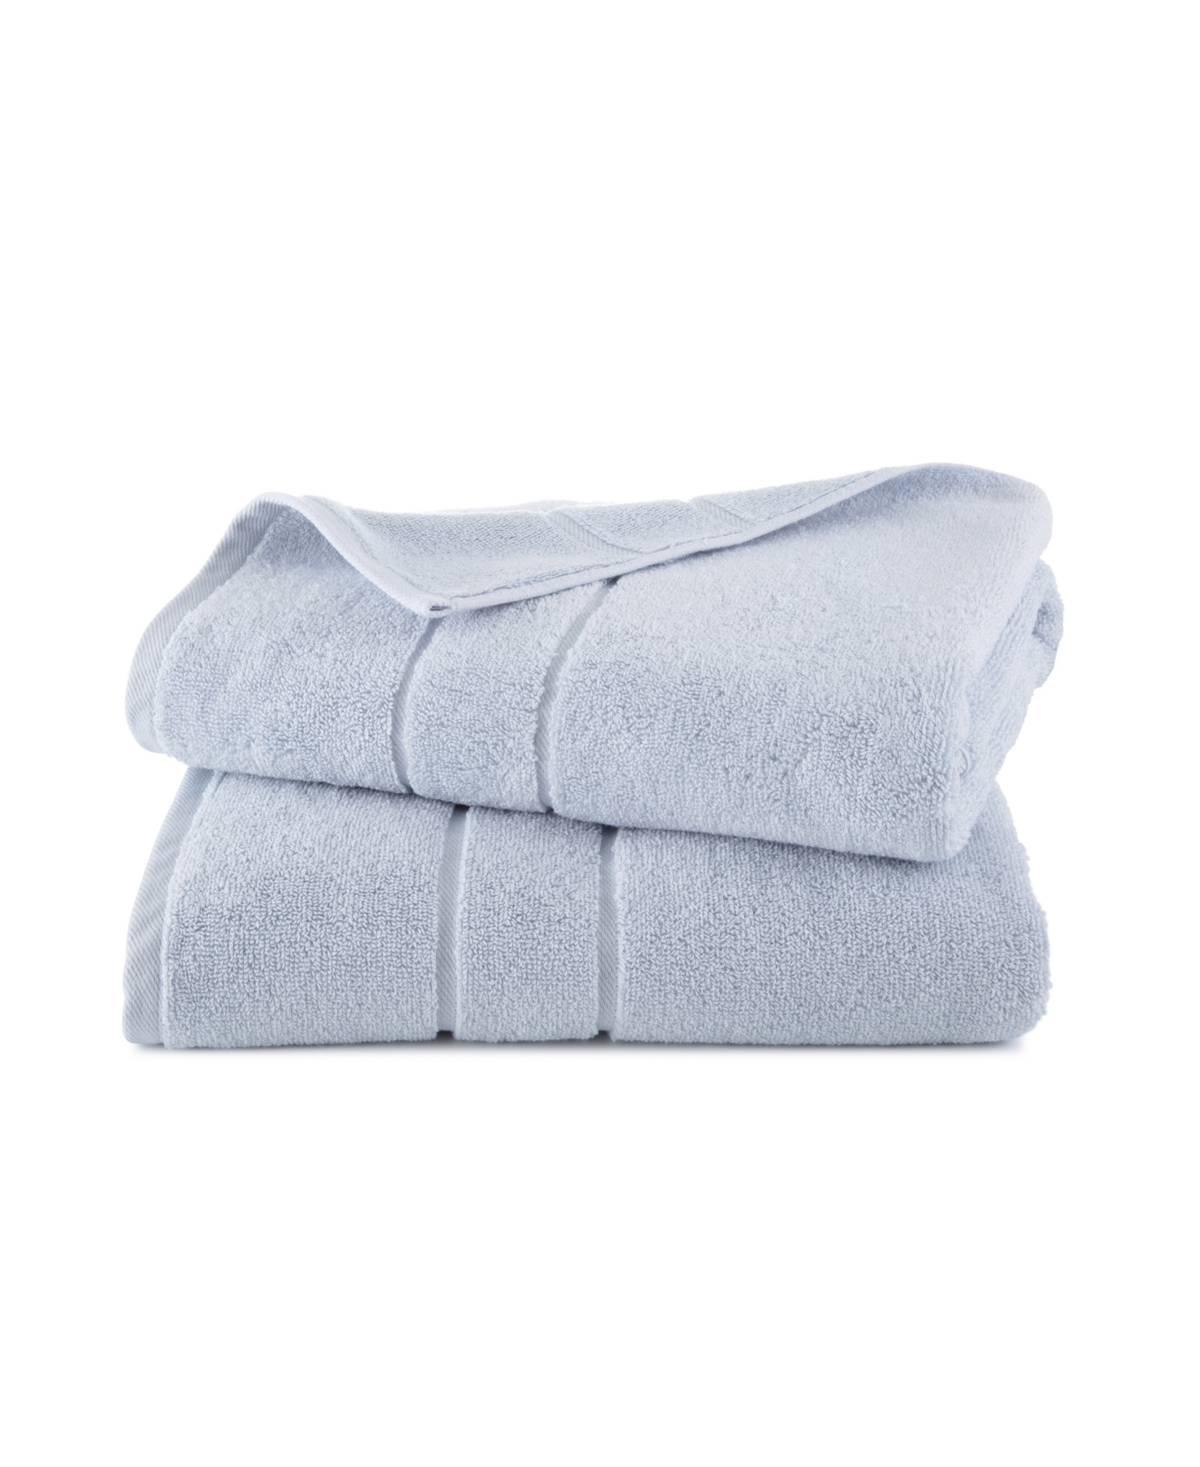 Clean Design Home X Martex Low Lint 2 Pack Supima Cotton Bath Towels In Blue